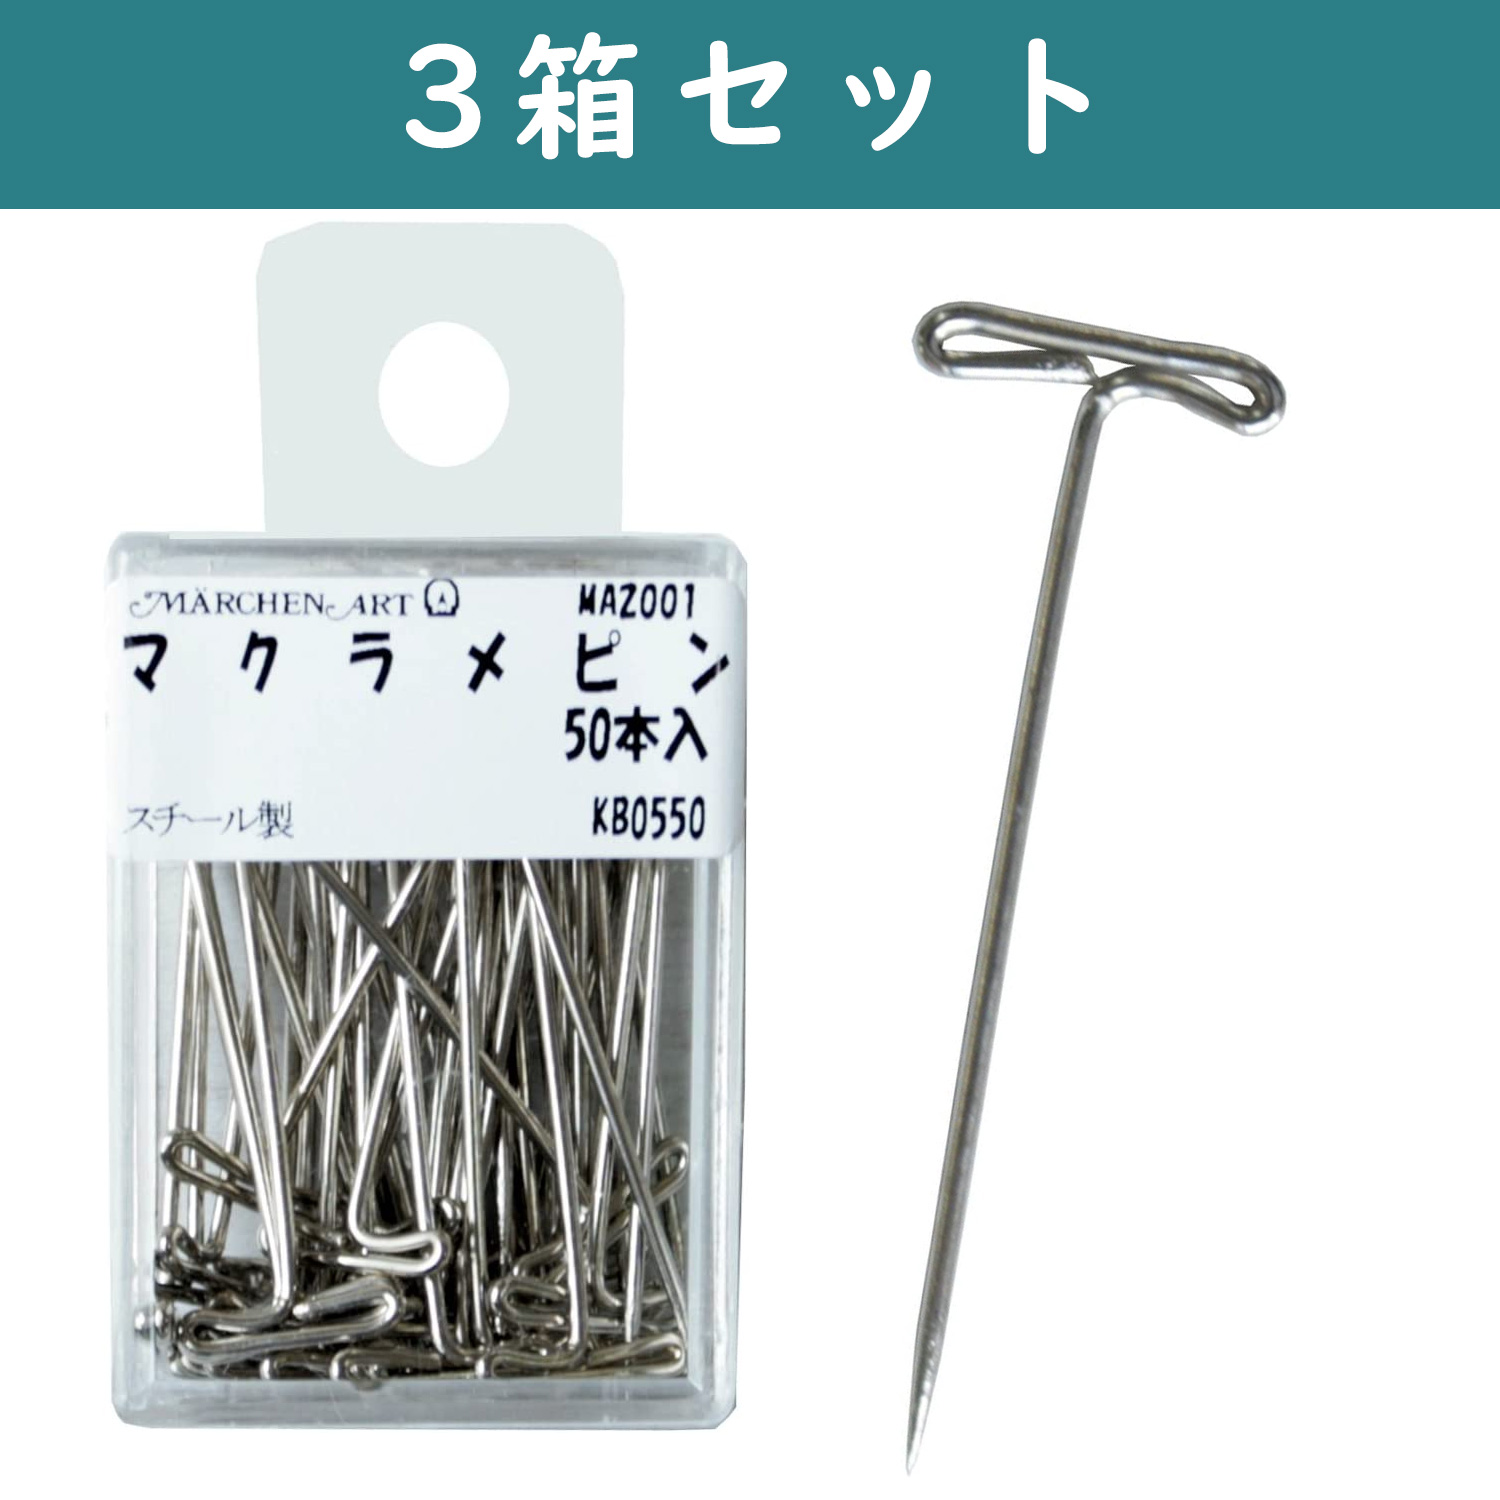 ■ME-MA2001-3 Macrame pin 50 pieces 3 box unit (set)